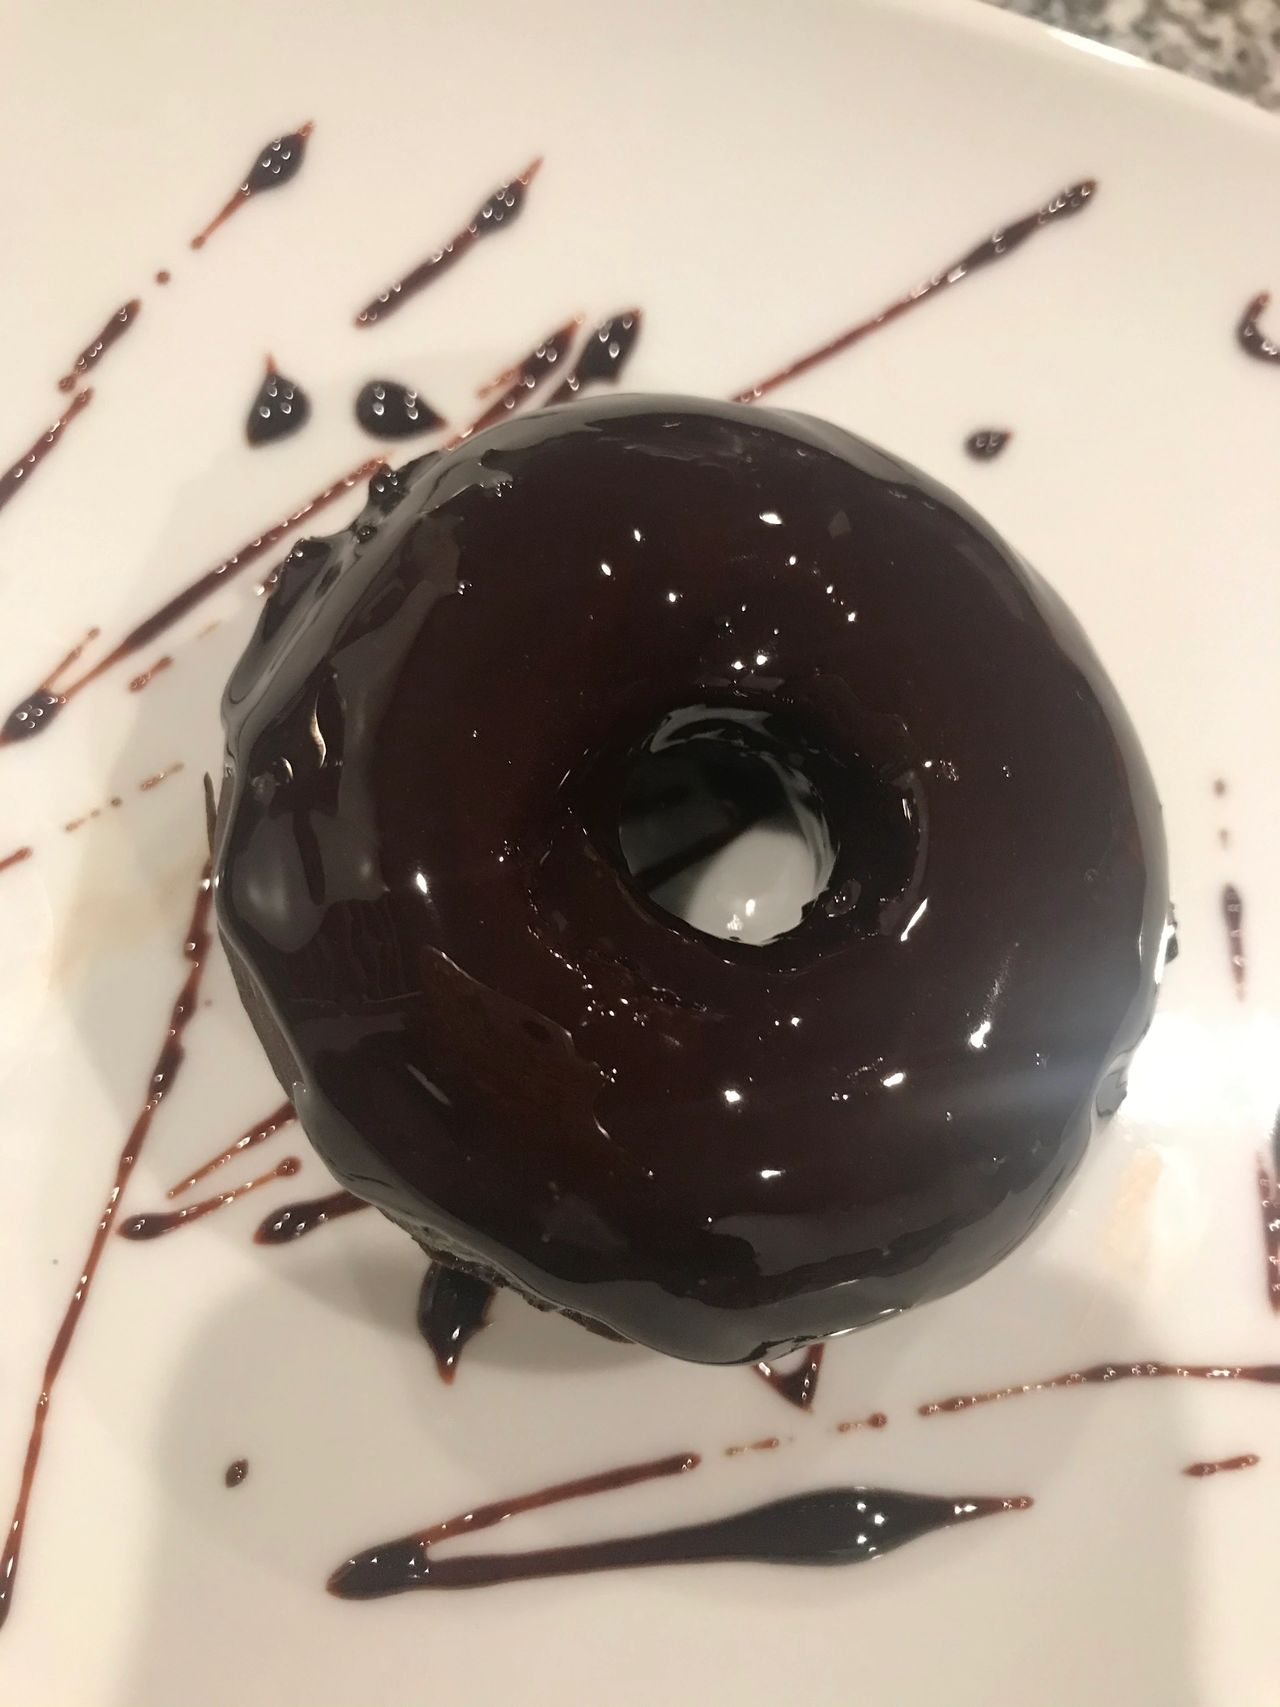 Baked Vegan Chocolate Donut with Chocolate Glaze